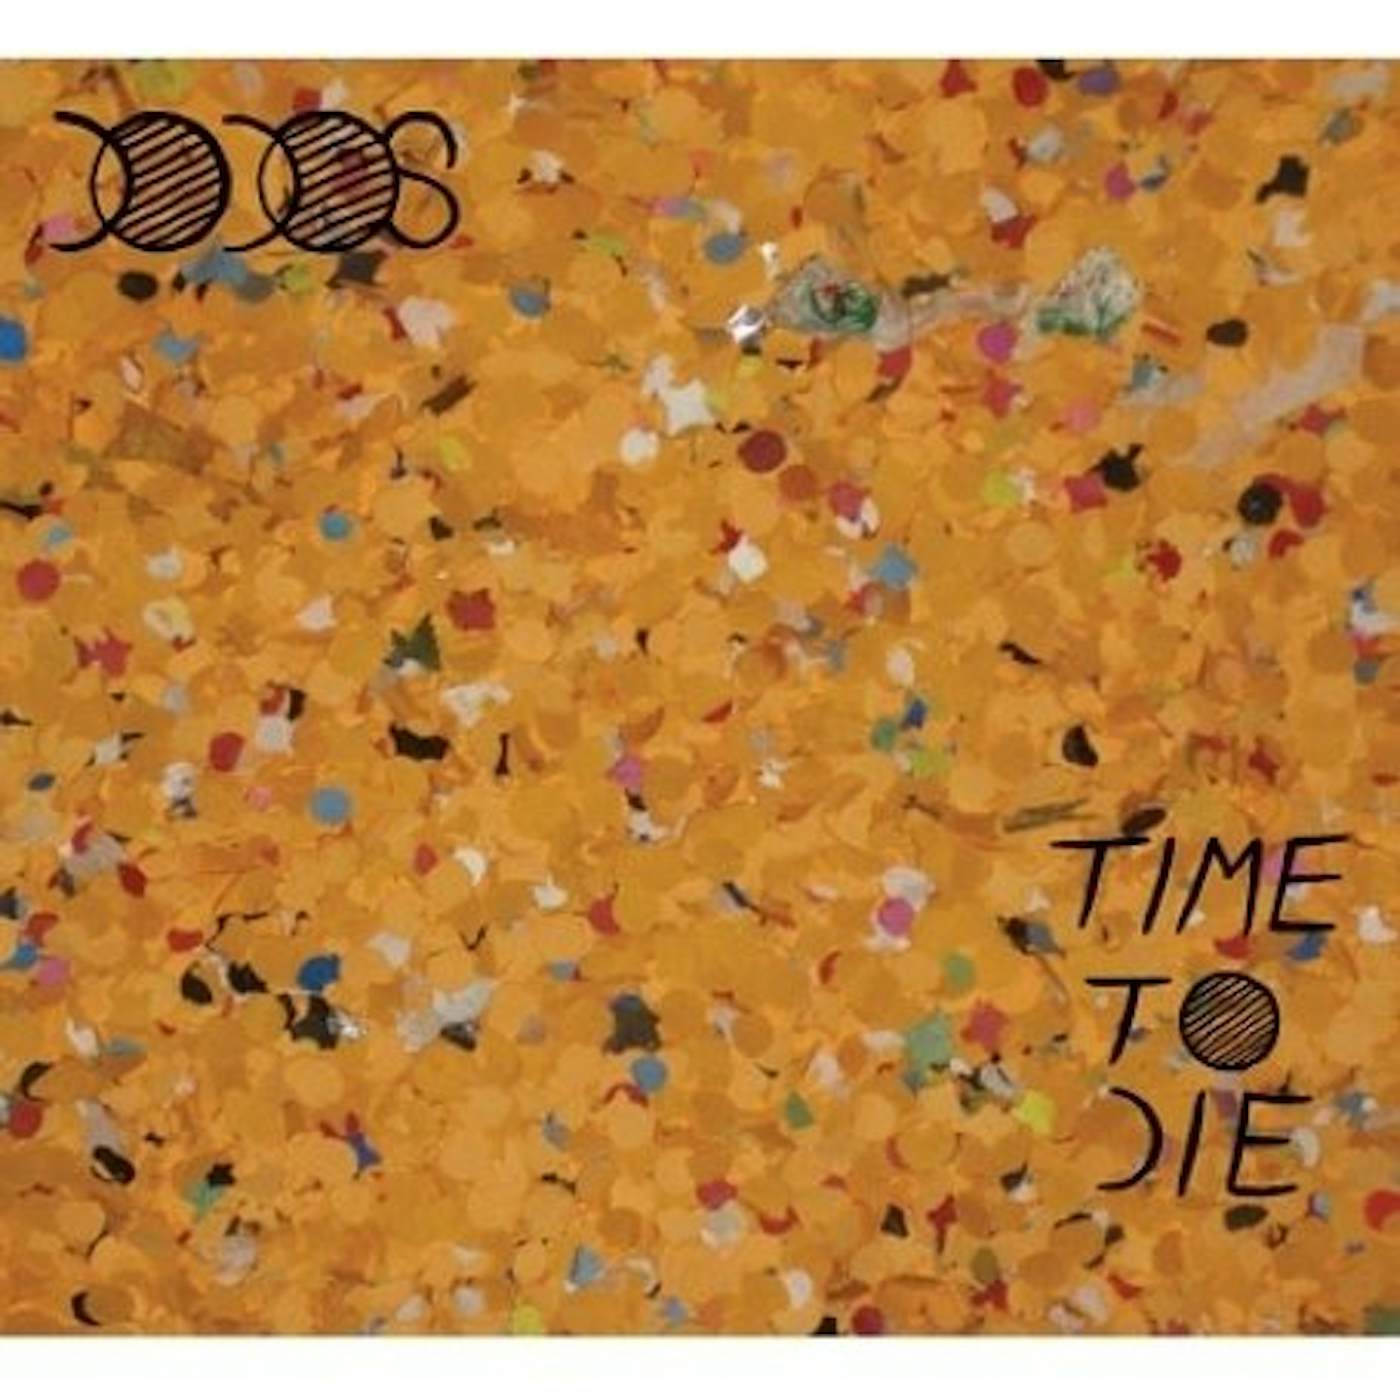 Dodos Time To Die Vinyl Record